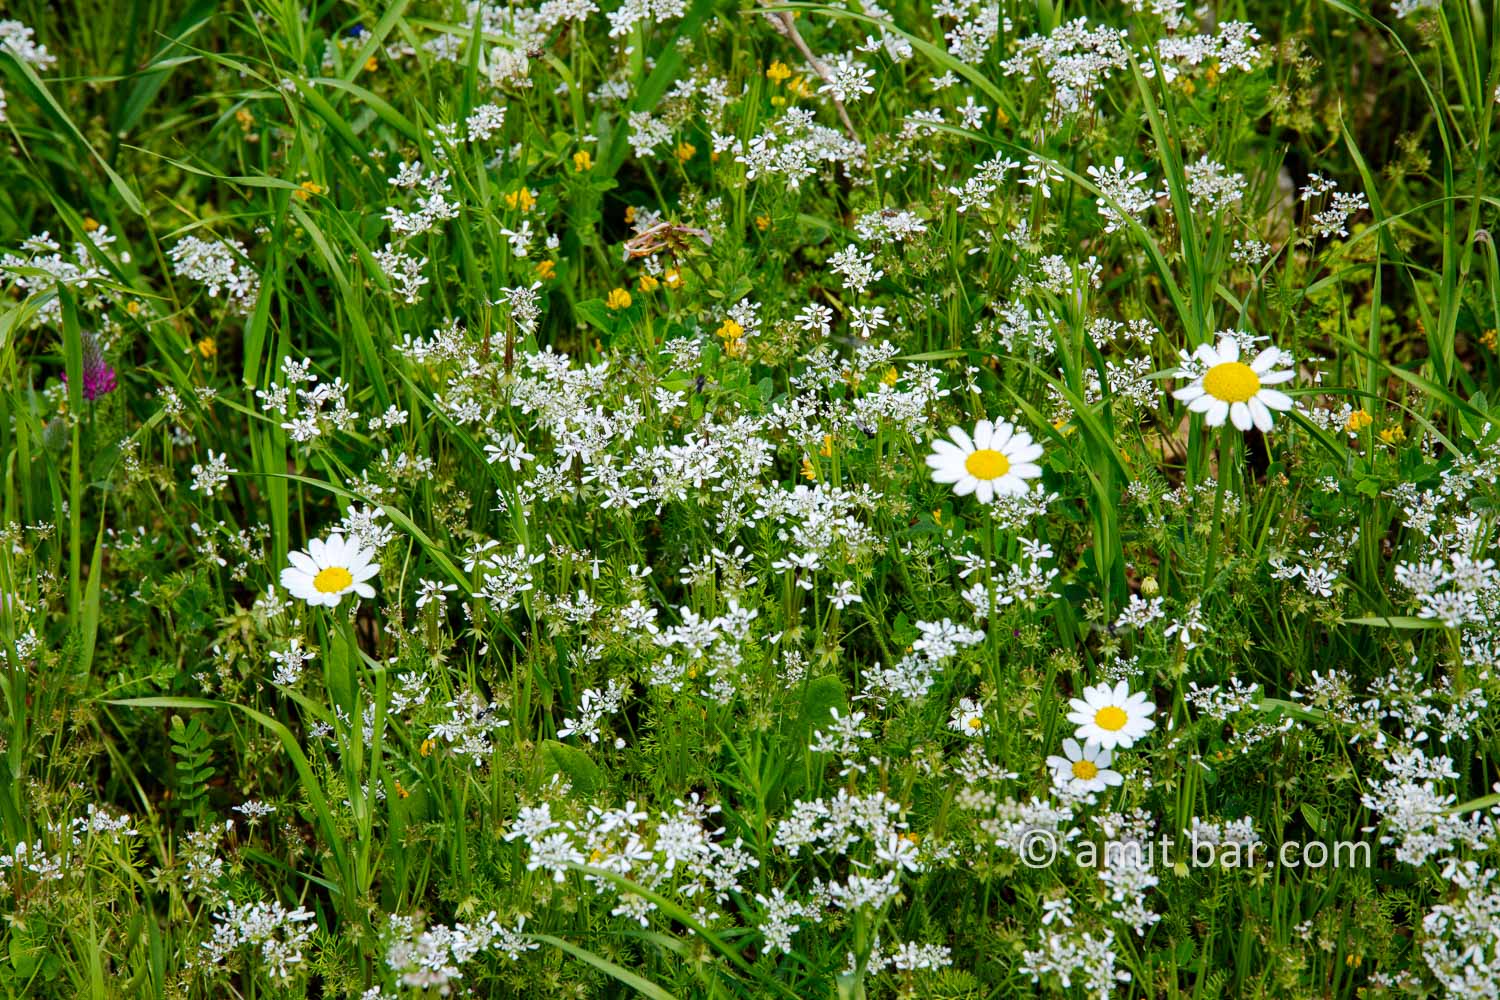 Carmel wild flowers IX: wild flowers on mountain Carmel, Israel in the spring time